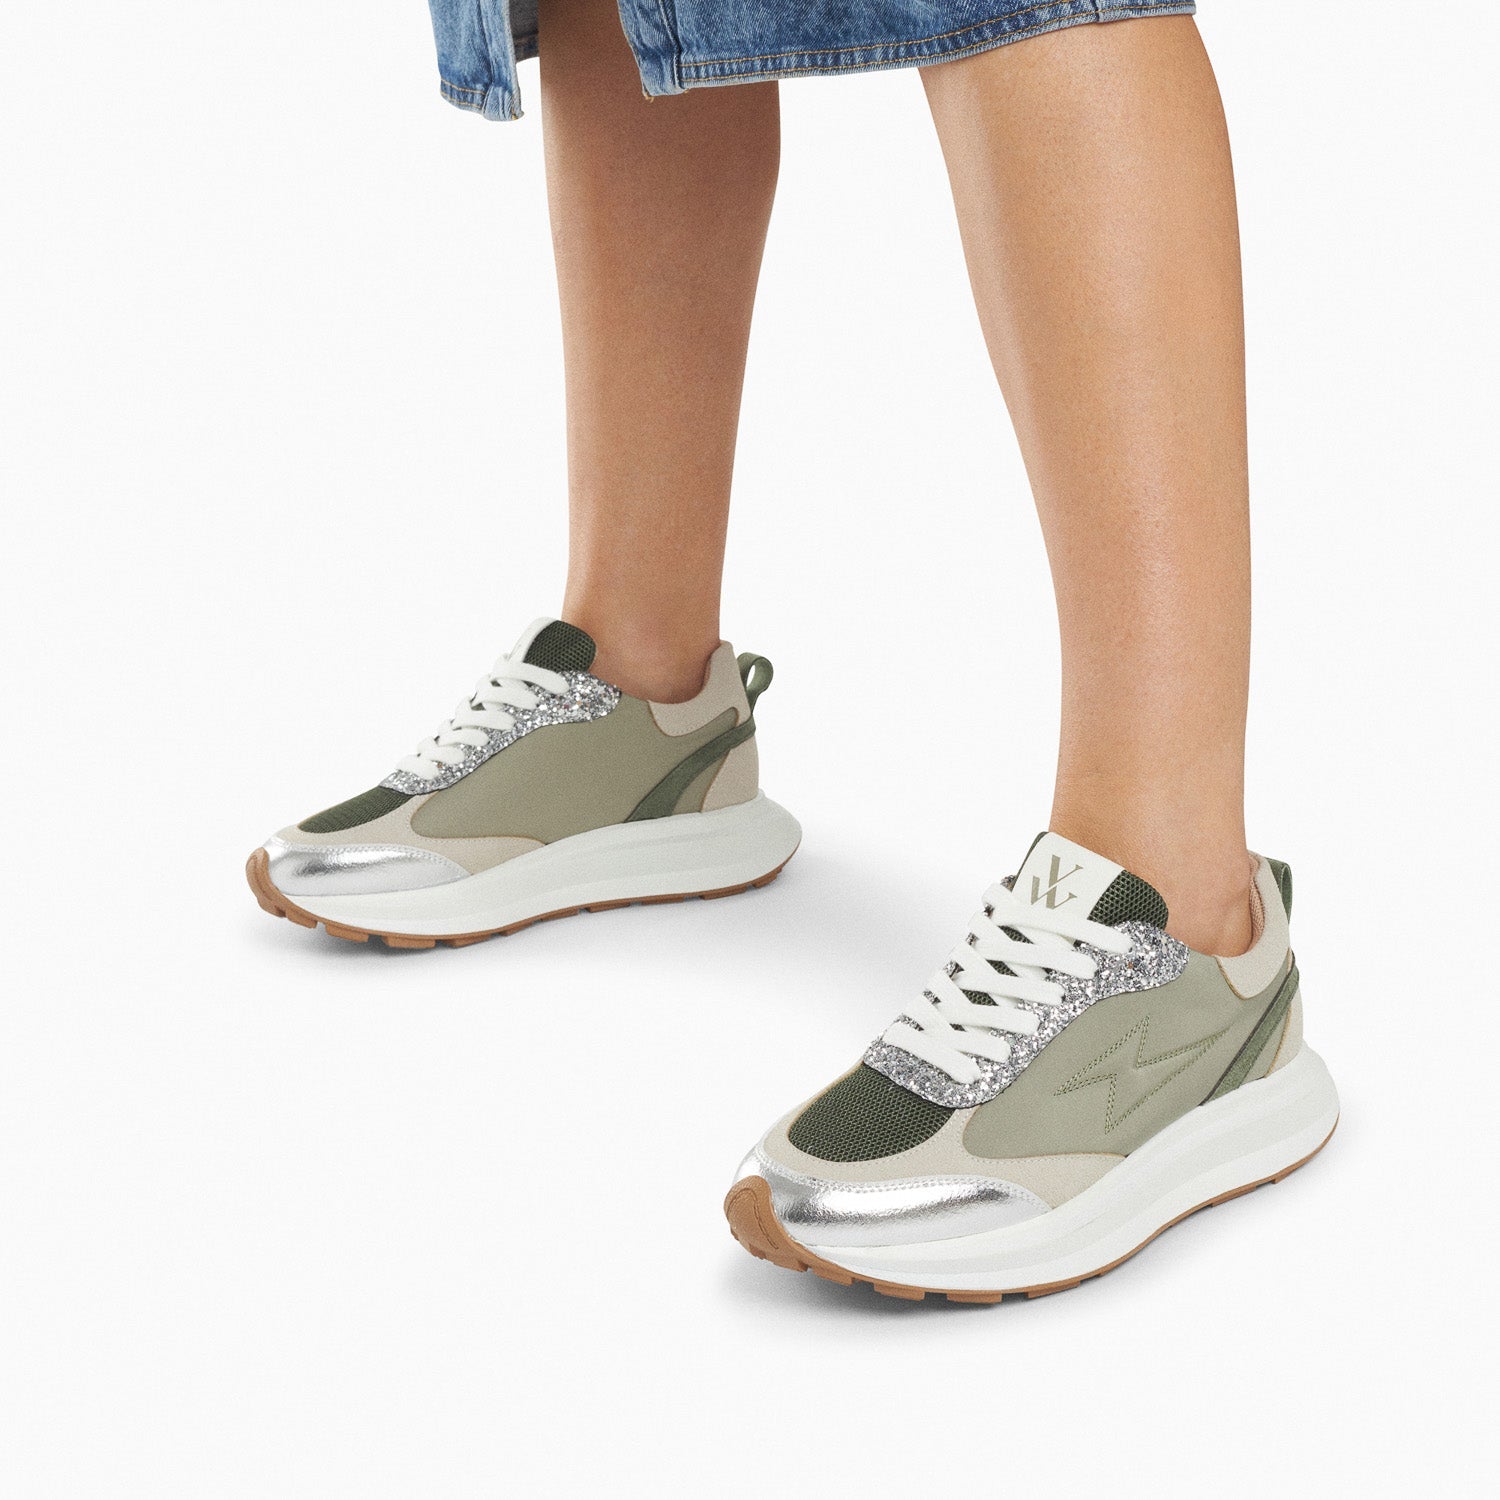 Sneakers semelles épaisses femme Vanessa Wu en nylon kaki avec éclair cousu effet matelassé kaki